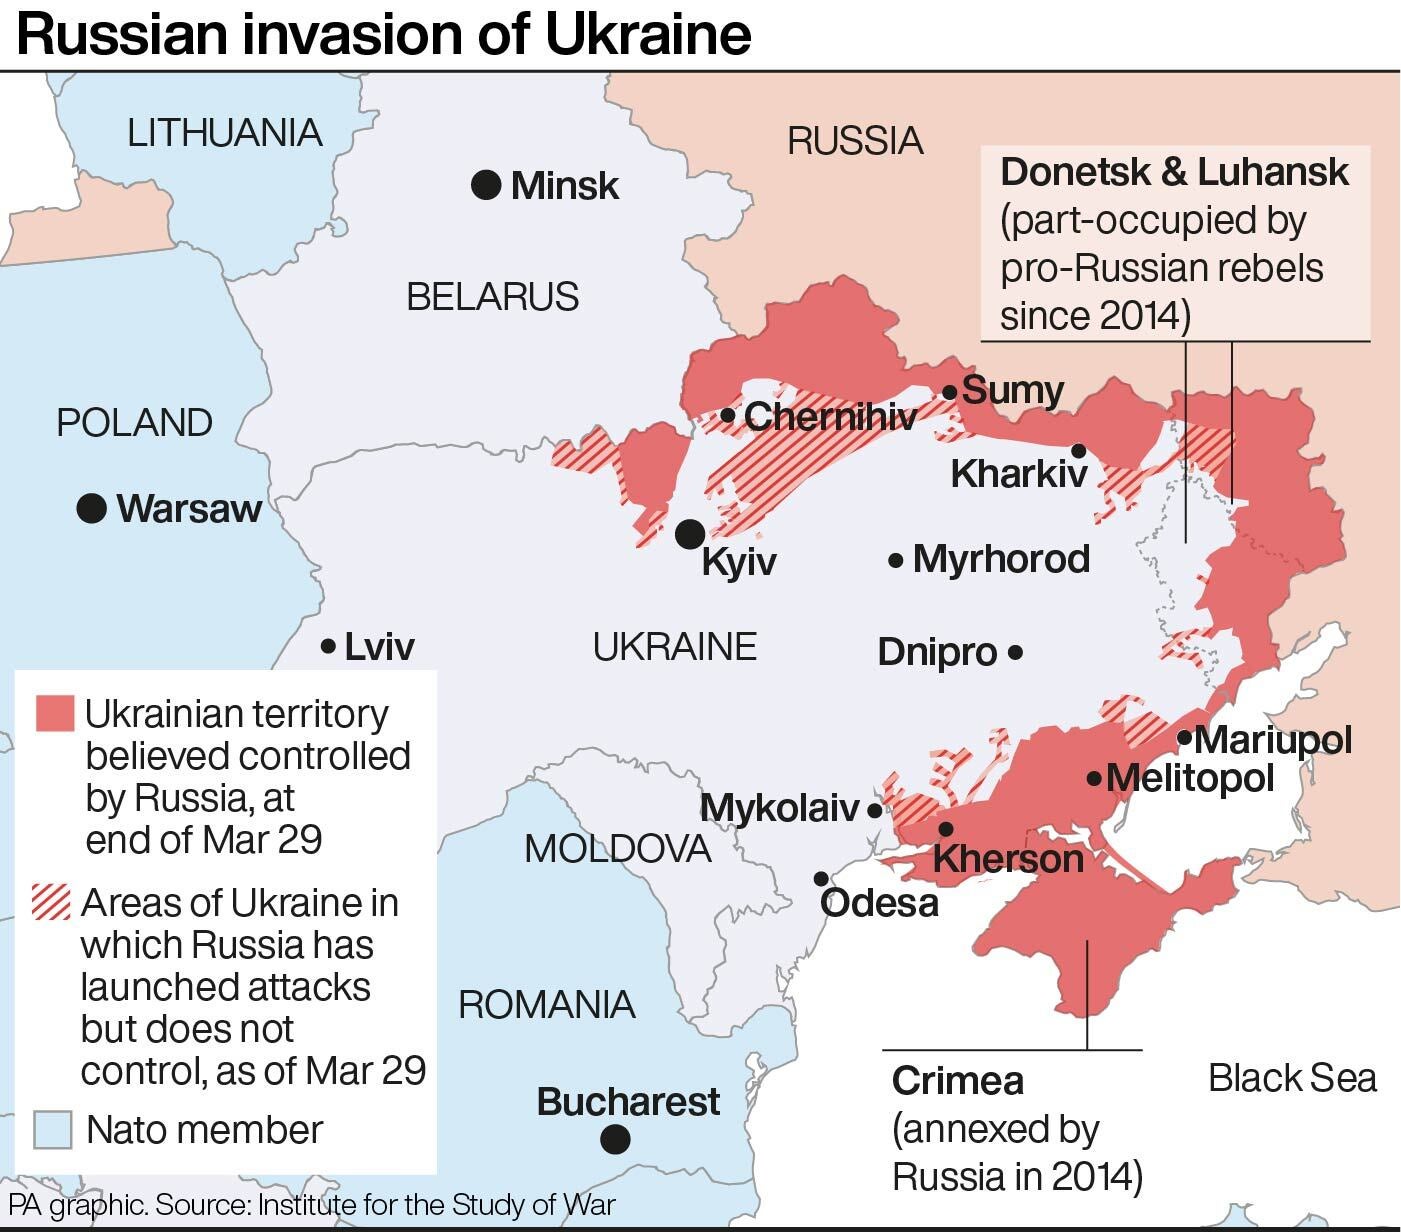 The extent of Russia’s invasion of Ukraine